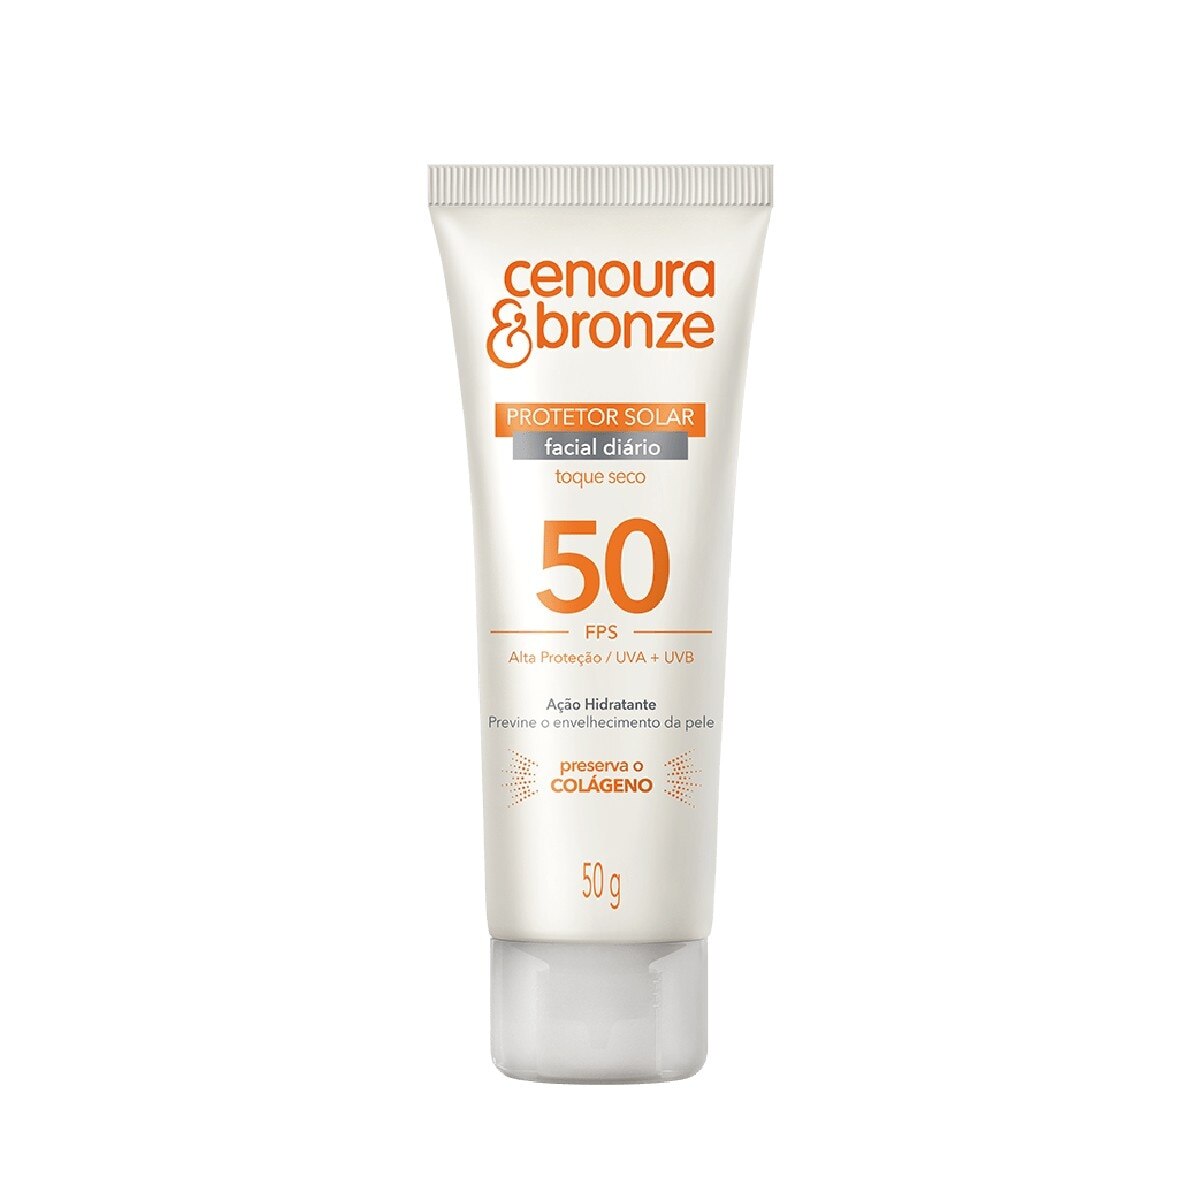 Protetor Solar Facial Diario Cenoura & Bronze FPS50 Toque Seco 50g